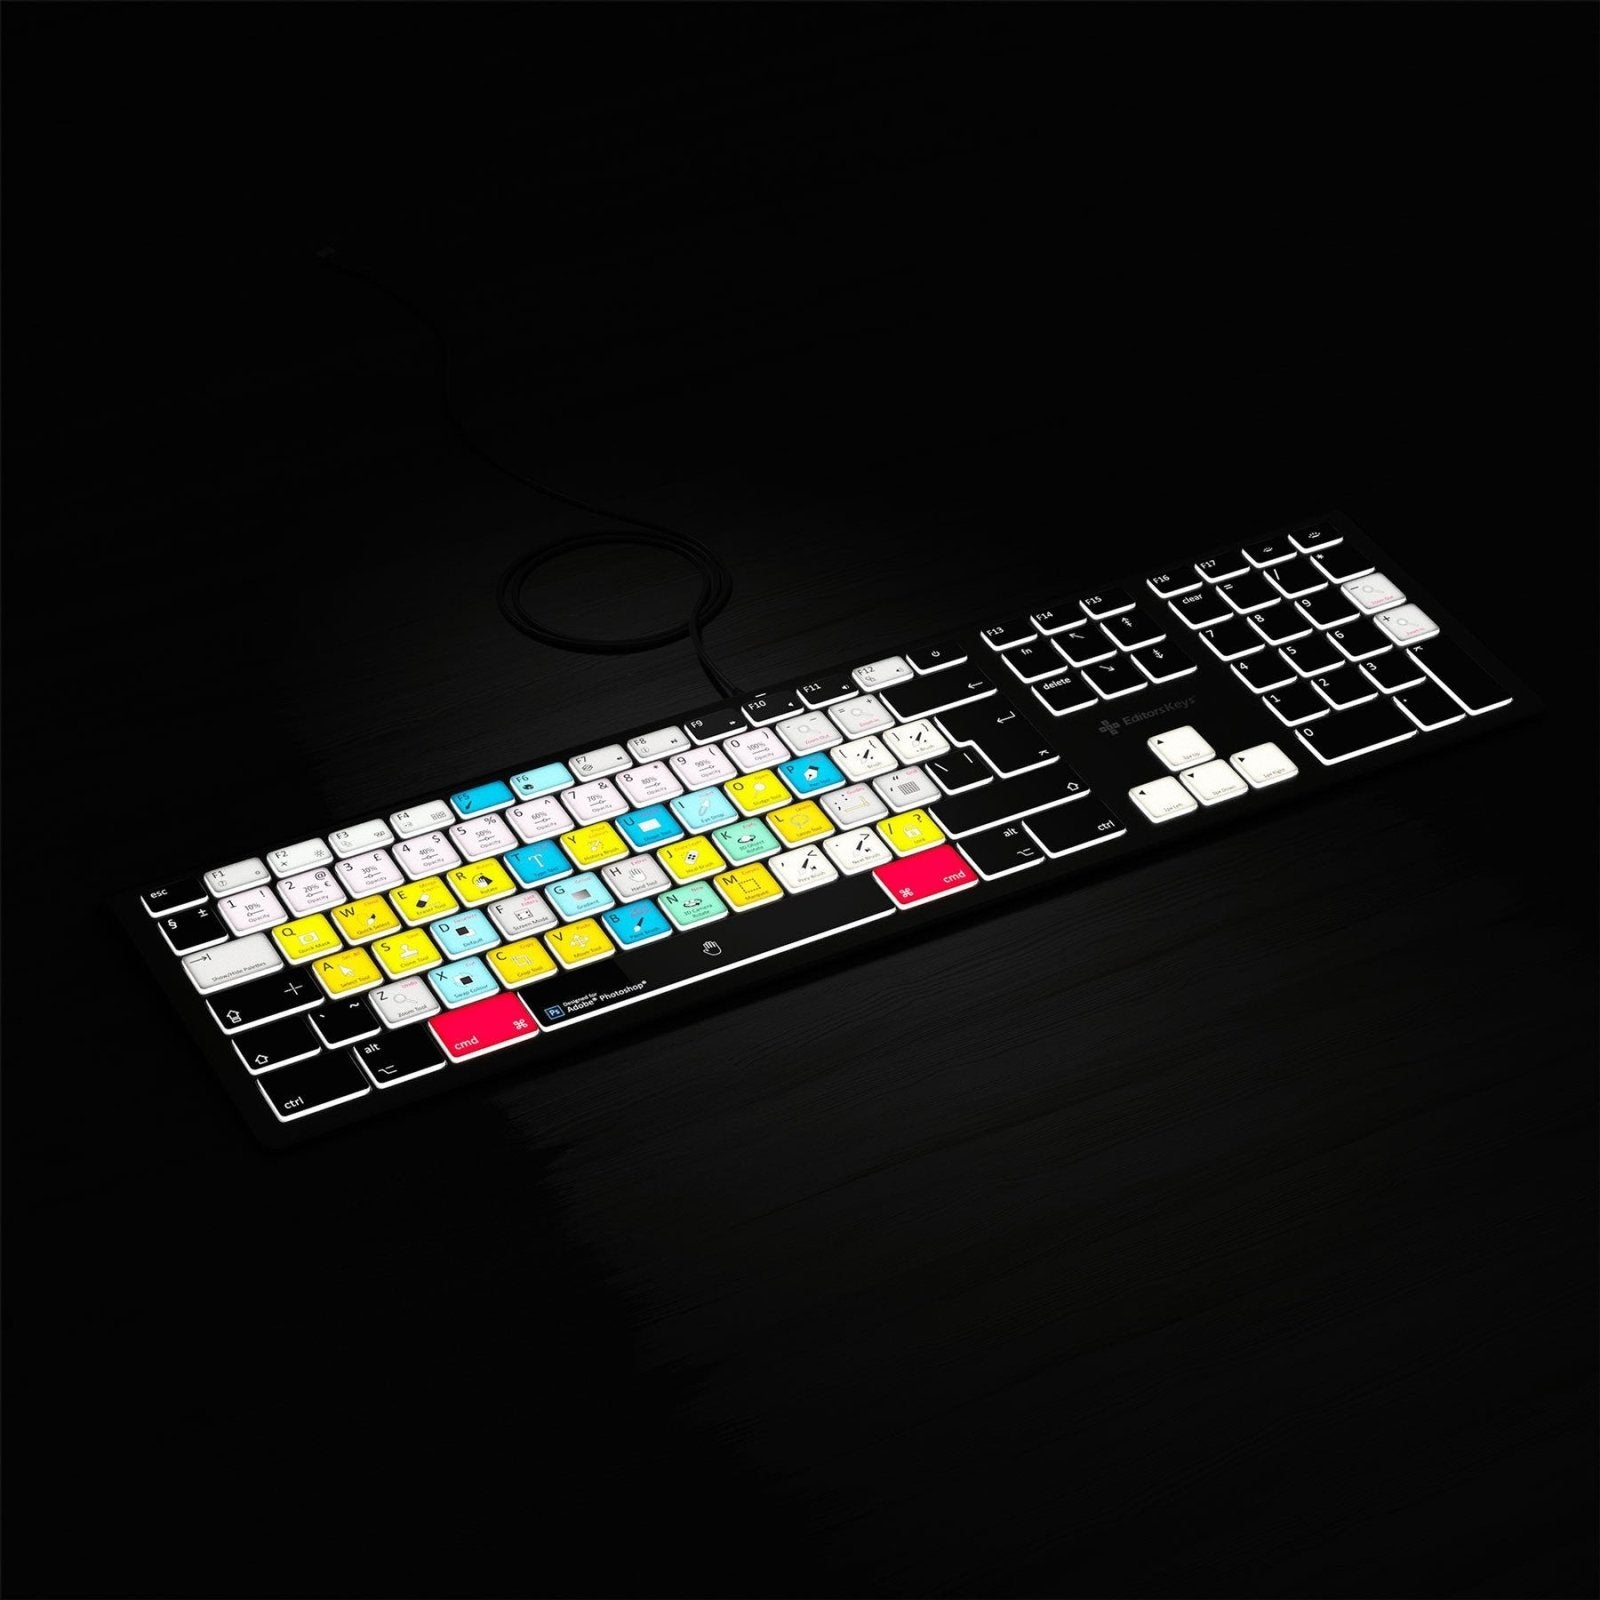 Adobe Photoshop Keyboard - Backlit - For Mac or PC - Editors Keys